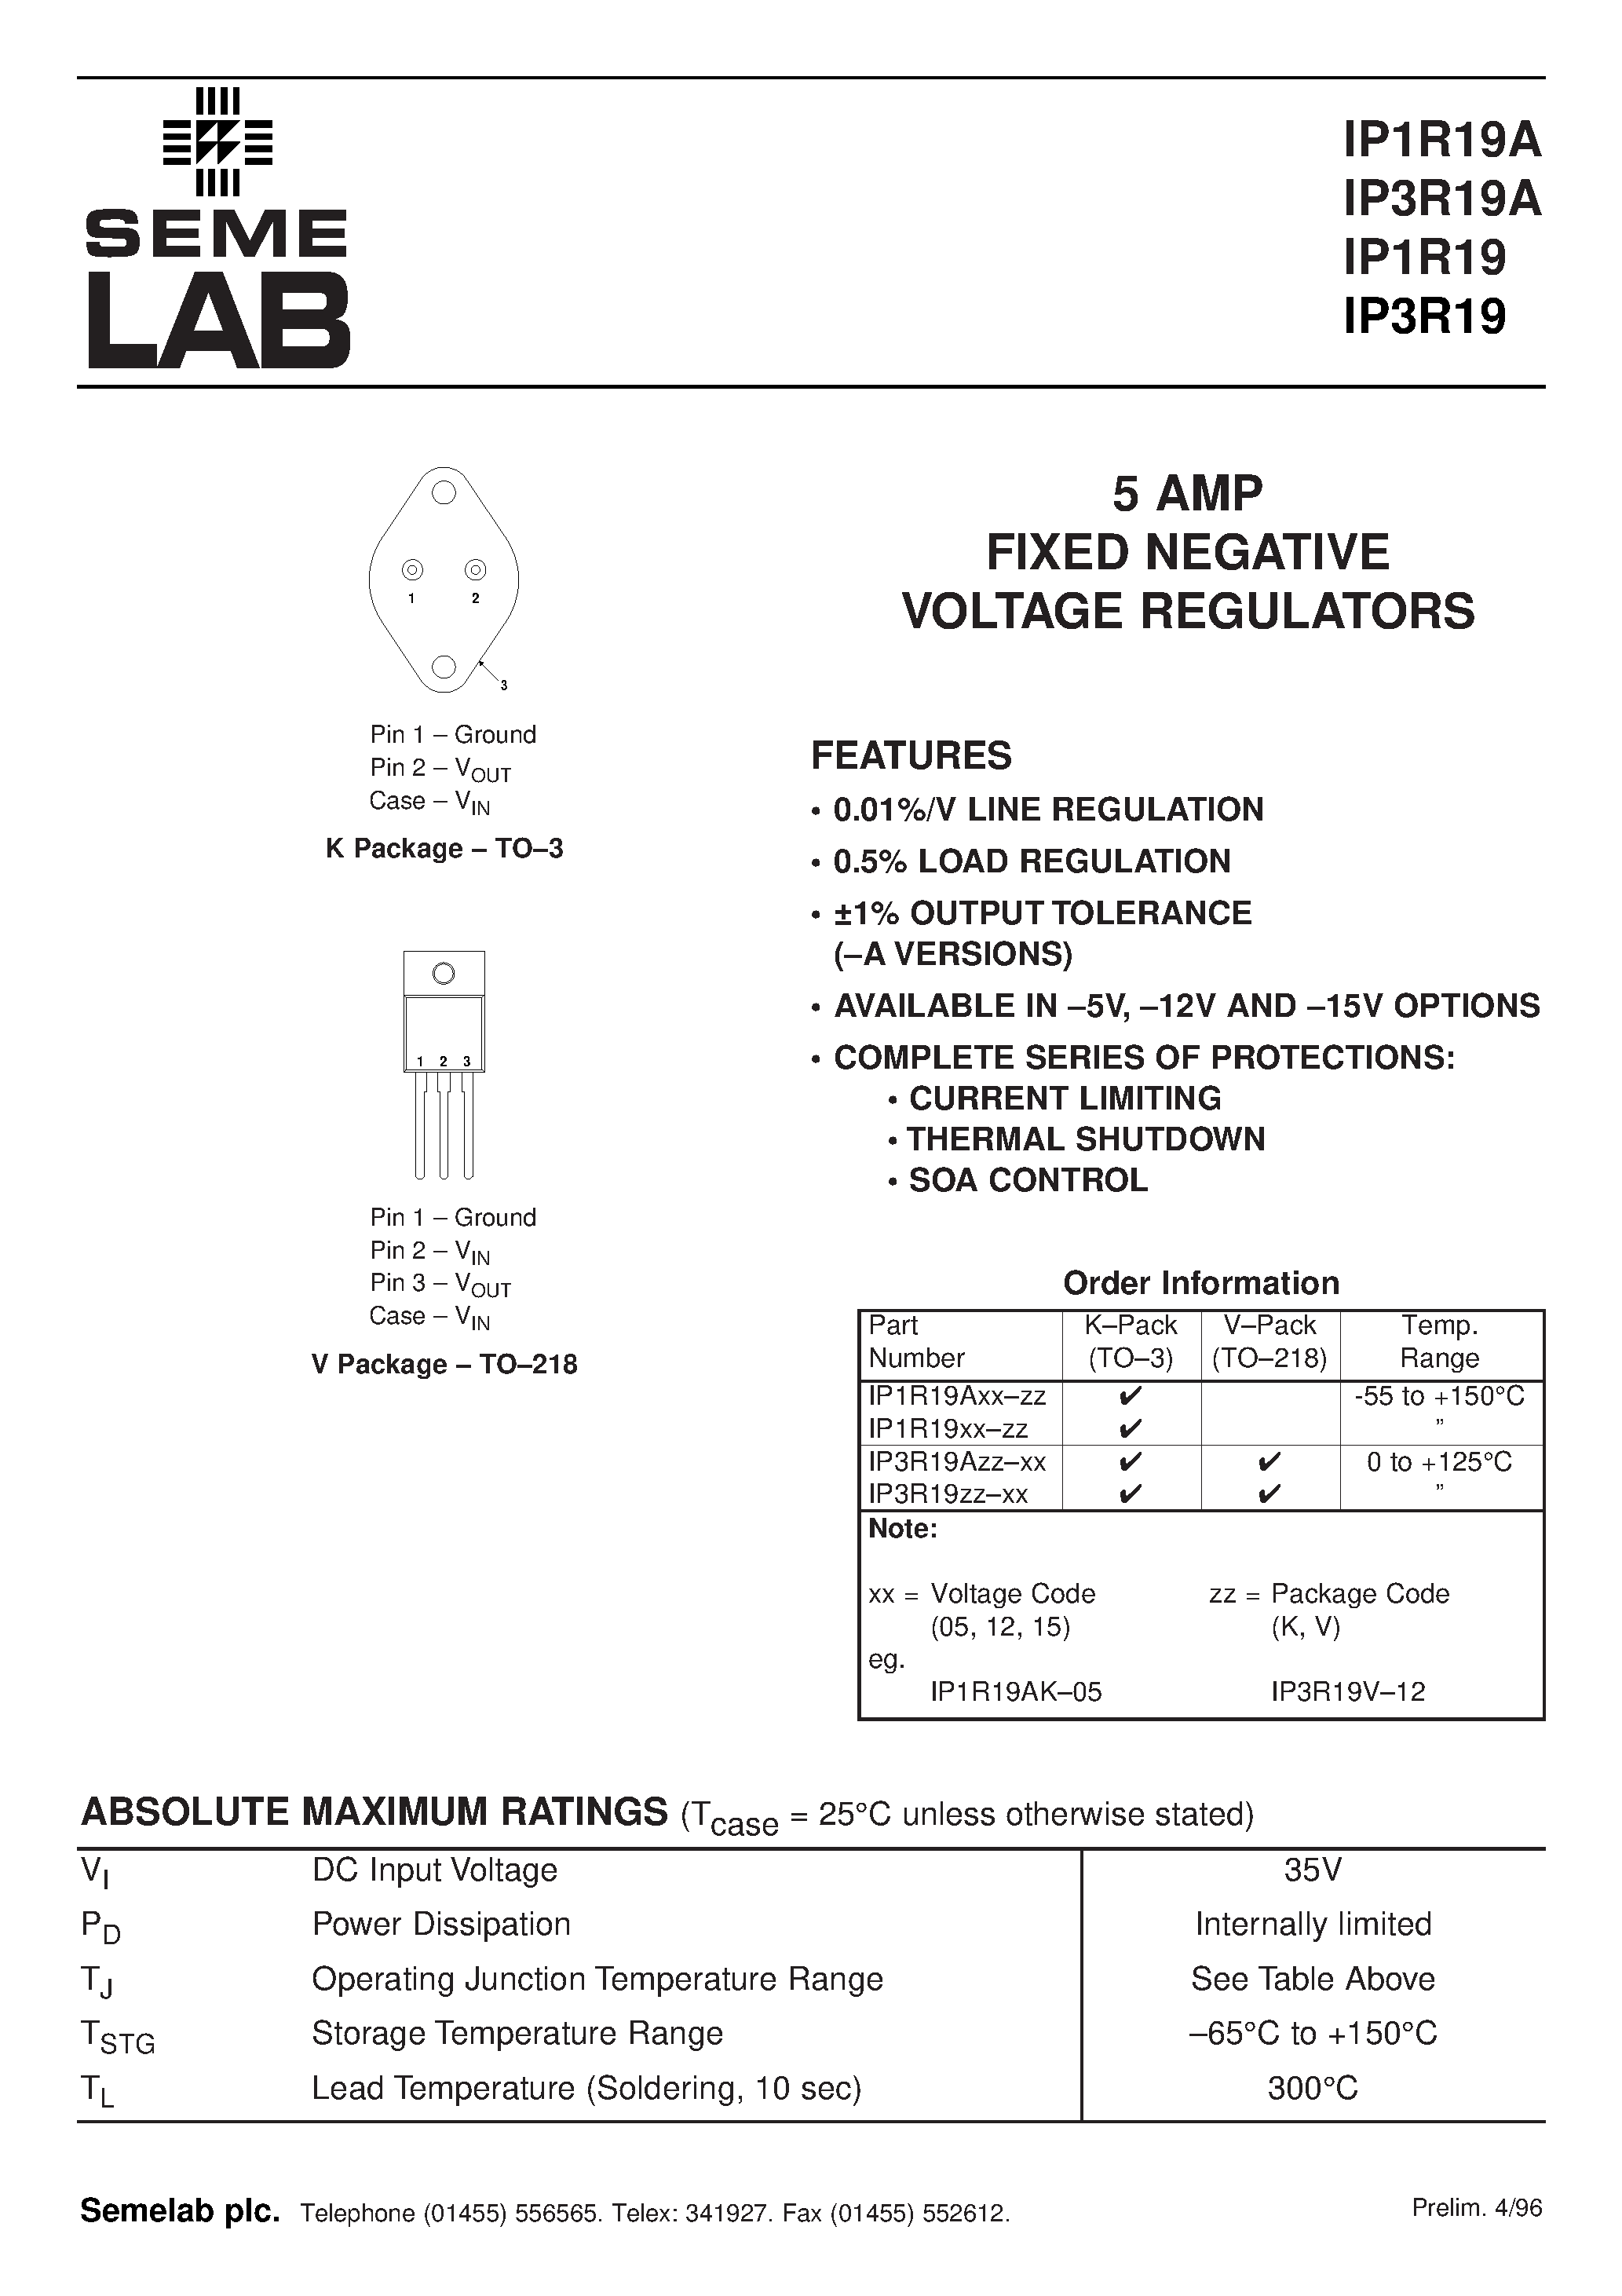 Datasheet IP1R19A15-K - 5 AMP FIXED NEGATIVE VOLTAGE REGULATORS page 1